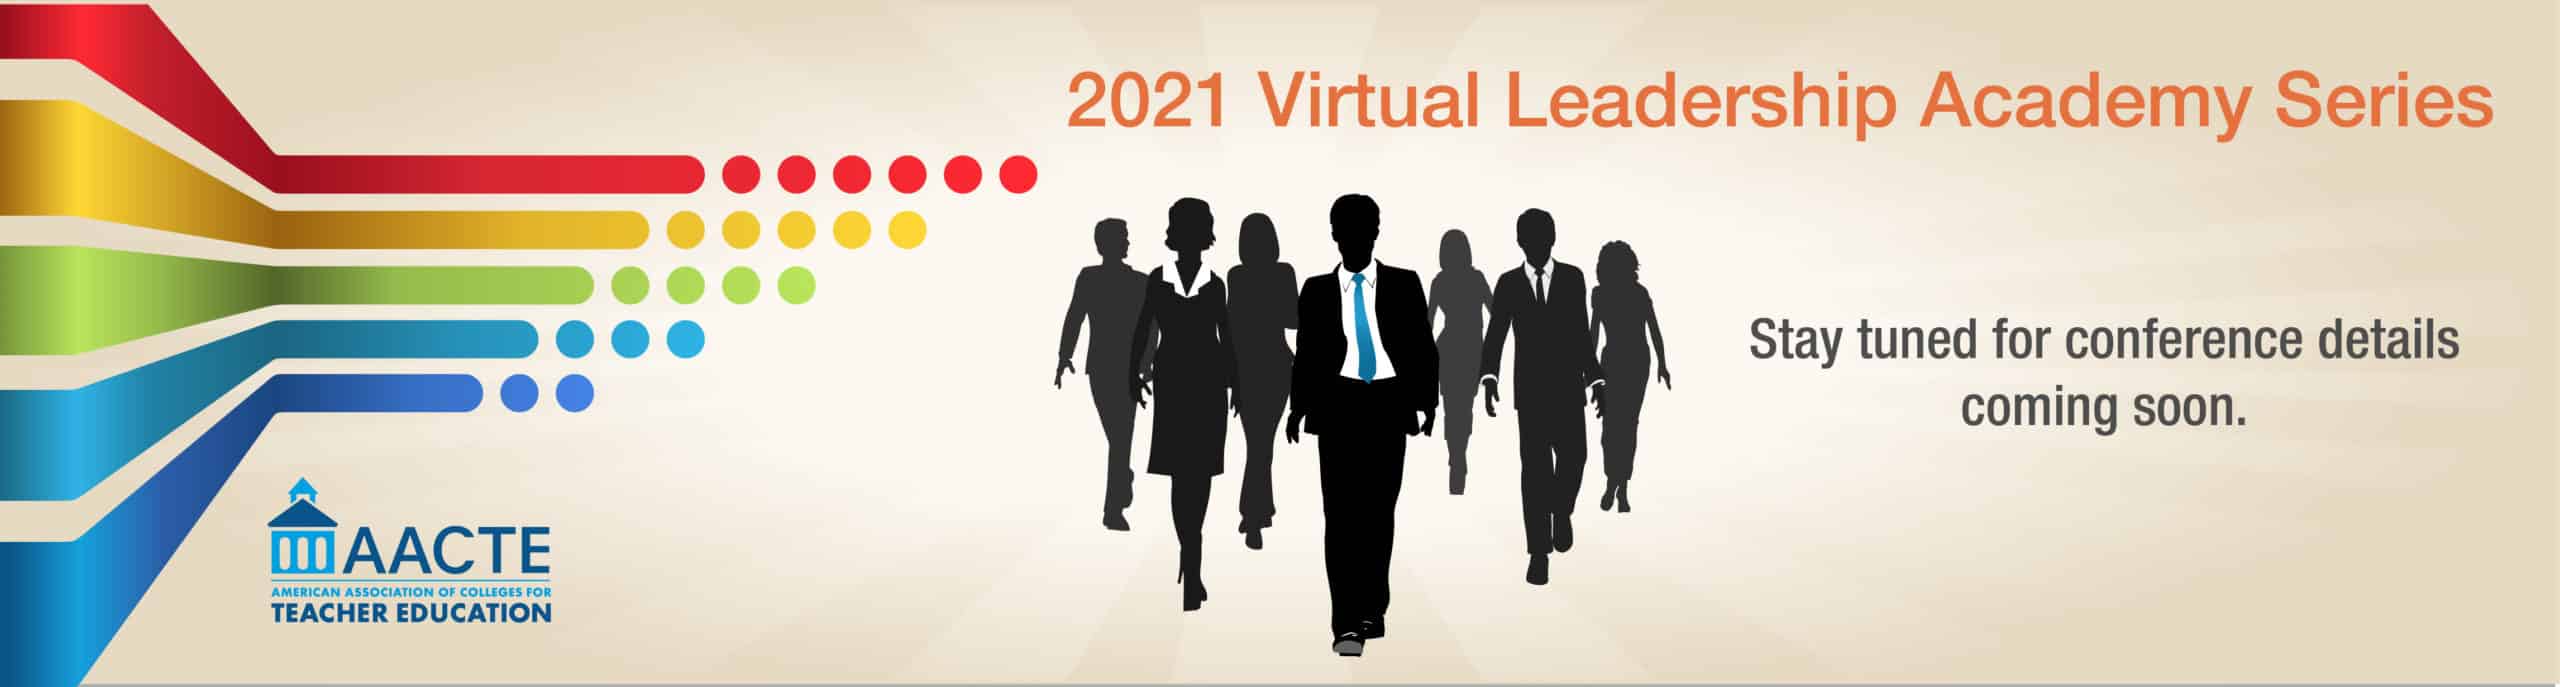 2021 Virtual Leadership Academy